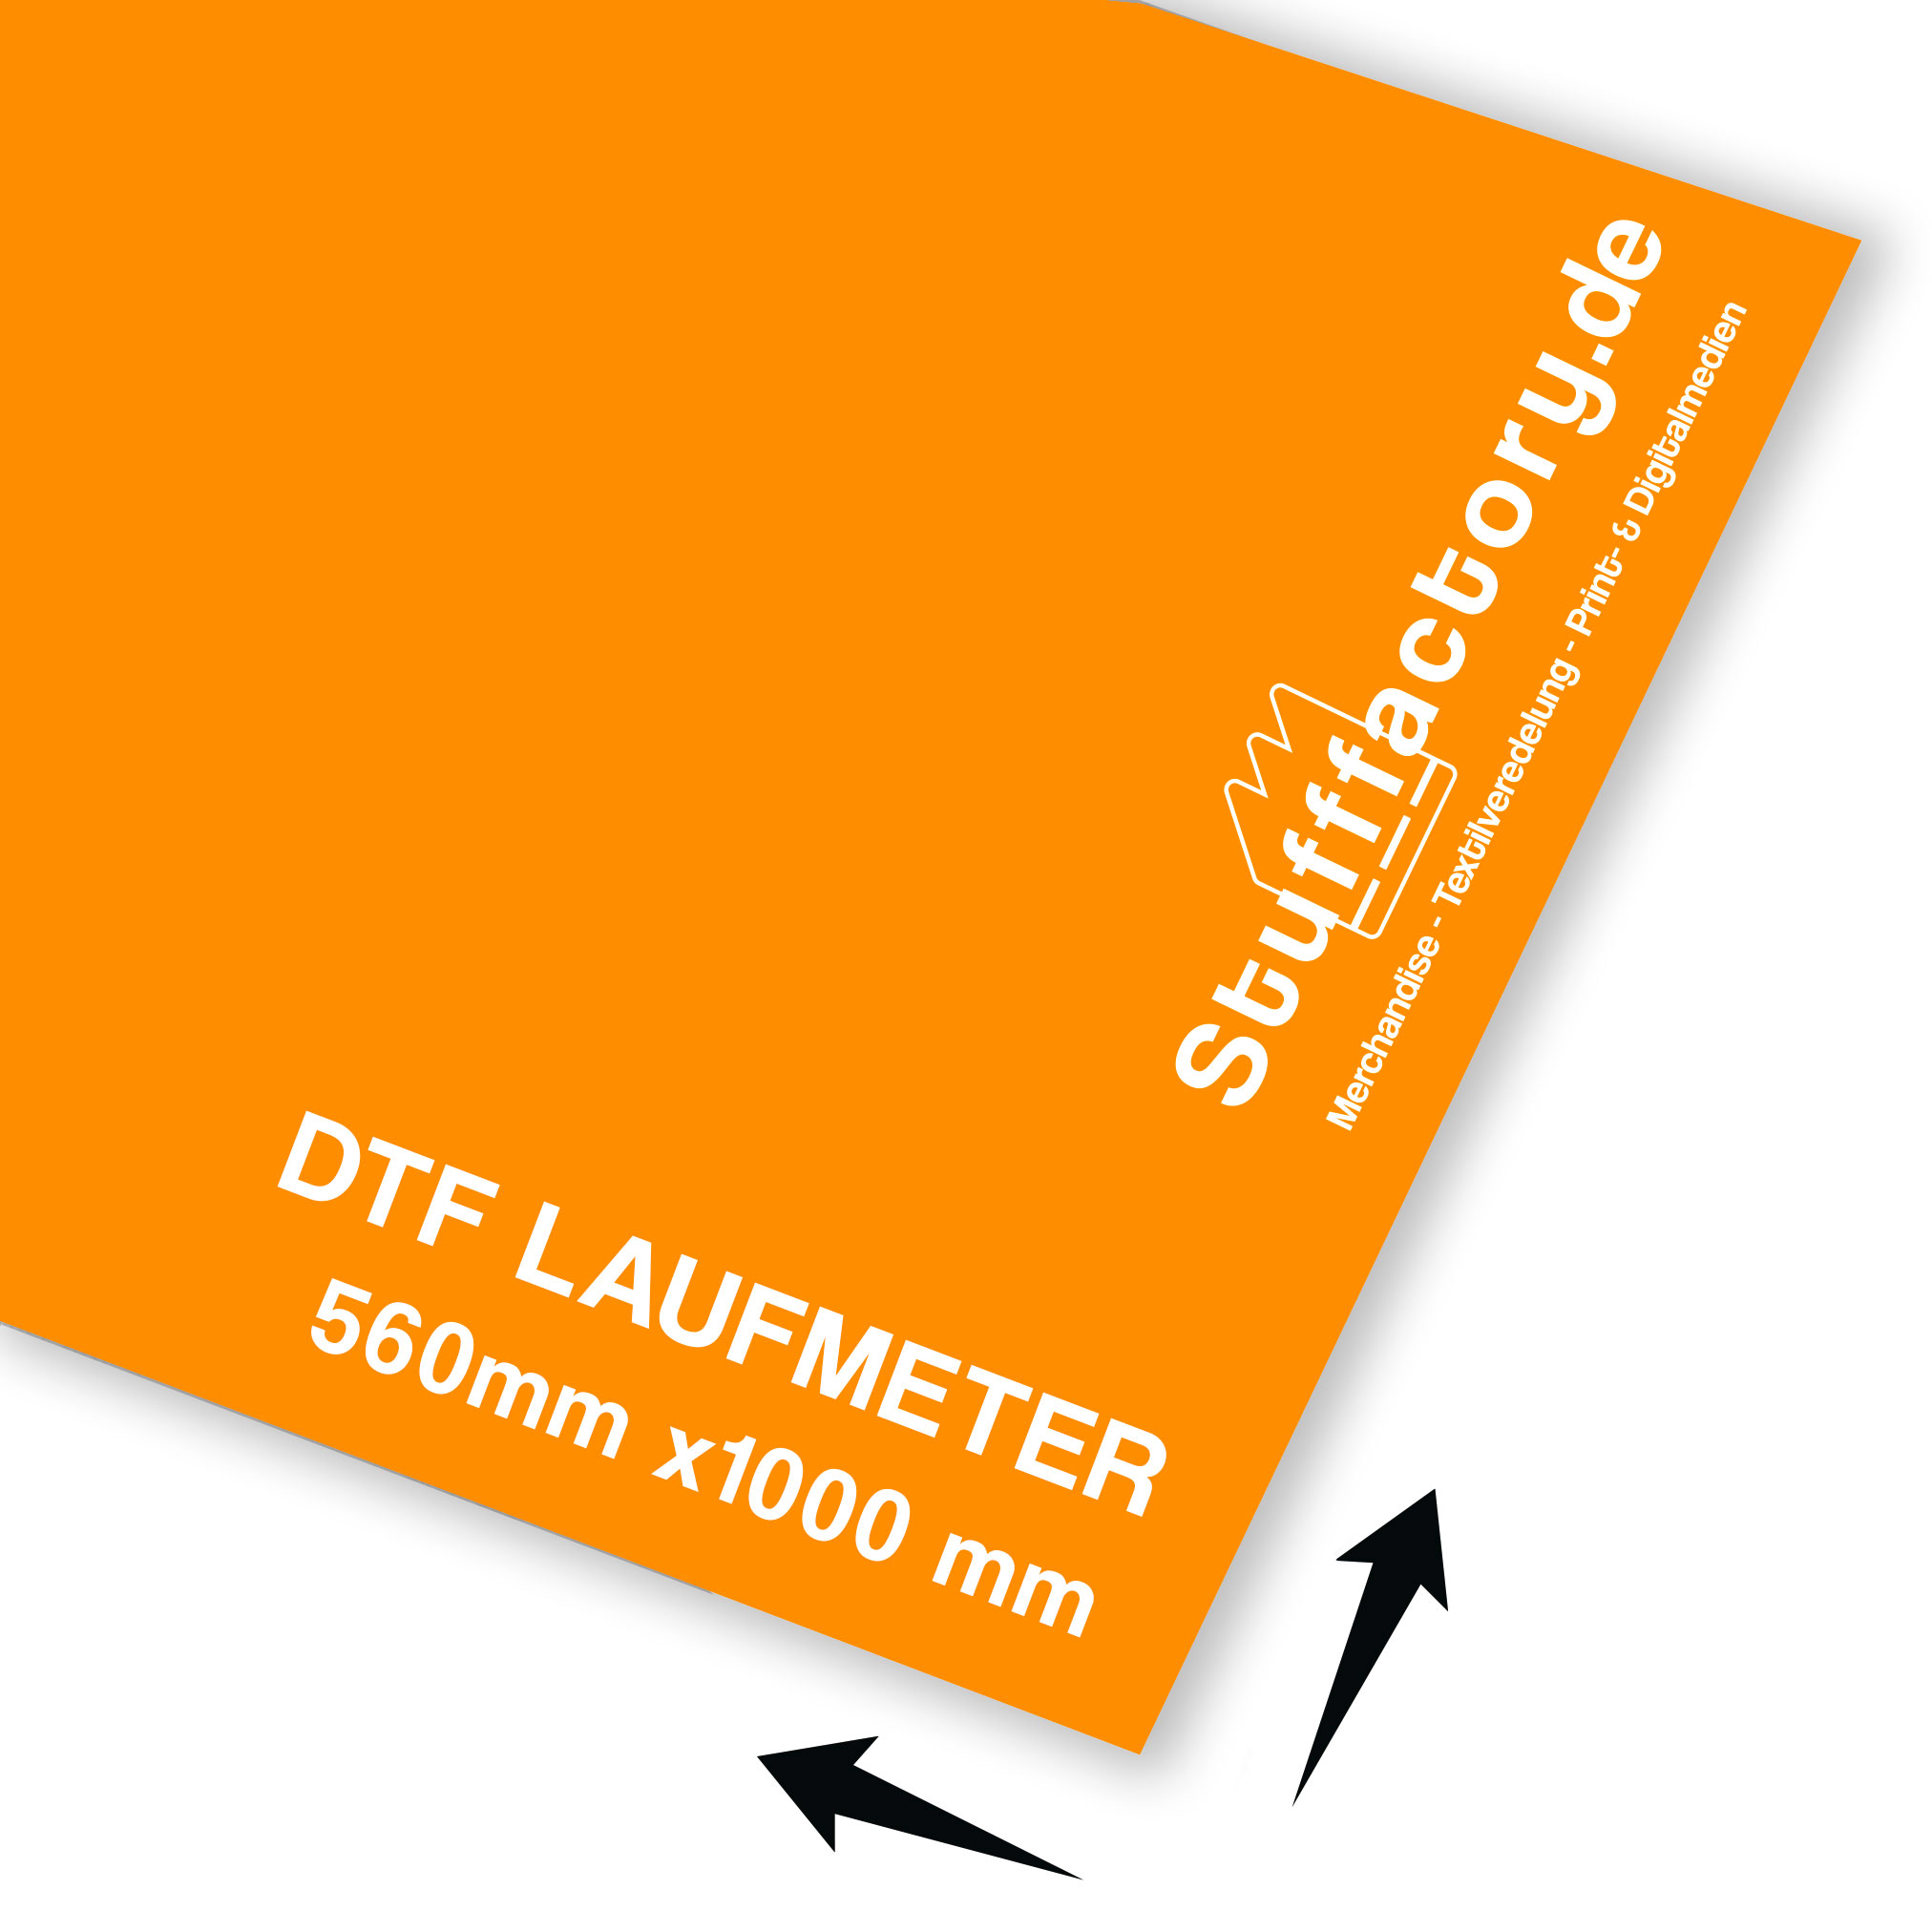 DTF Transfer 560 x 1000 mm - Laufmeter / Meterware